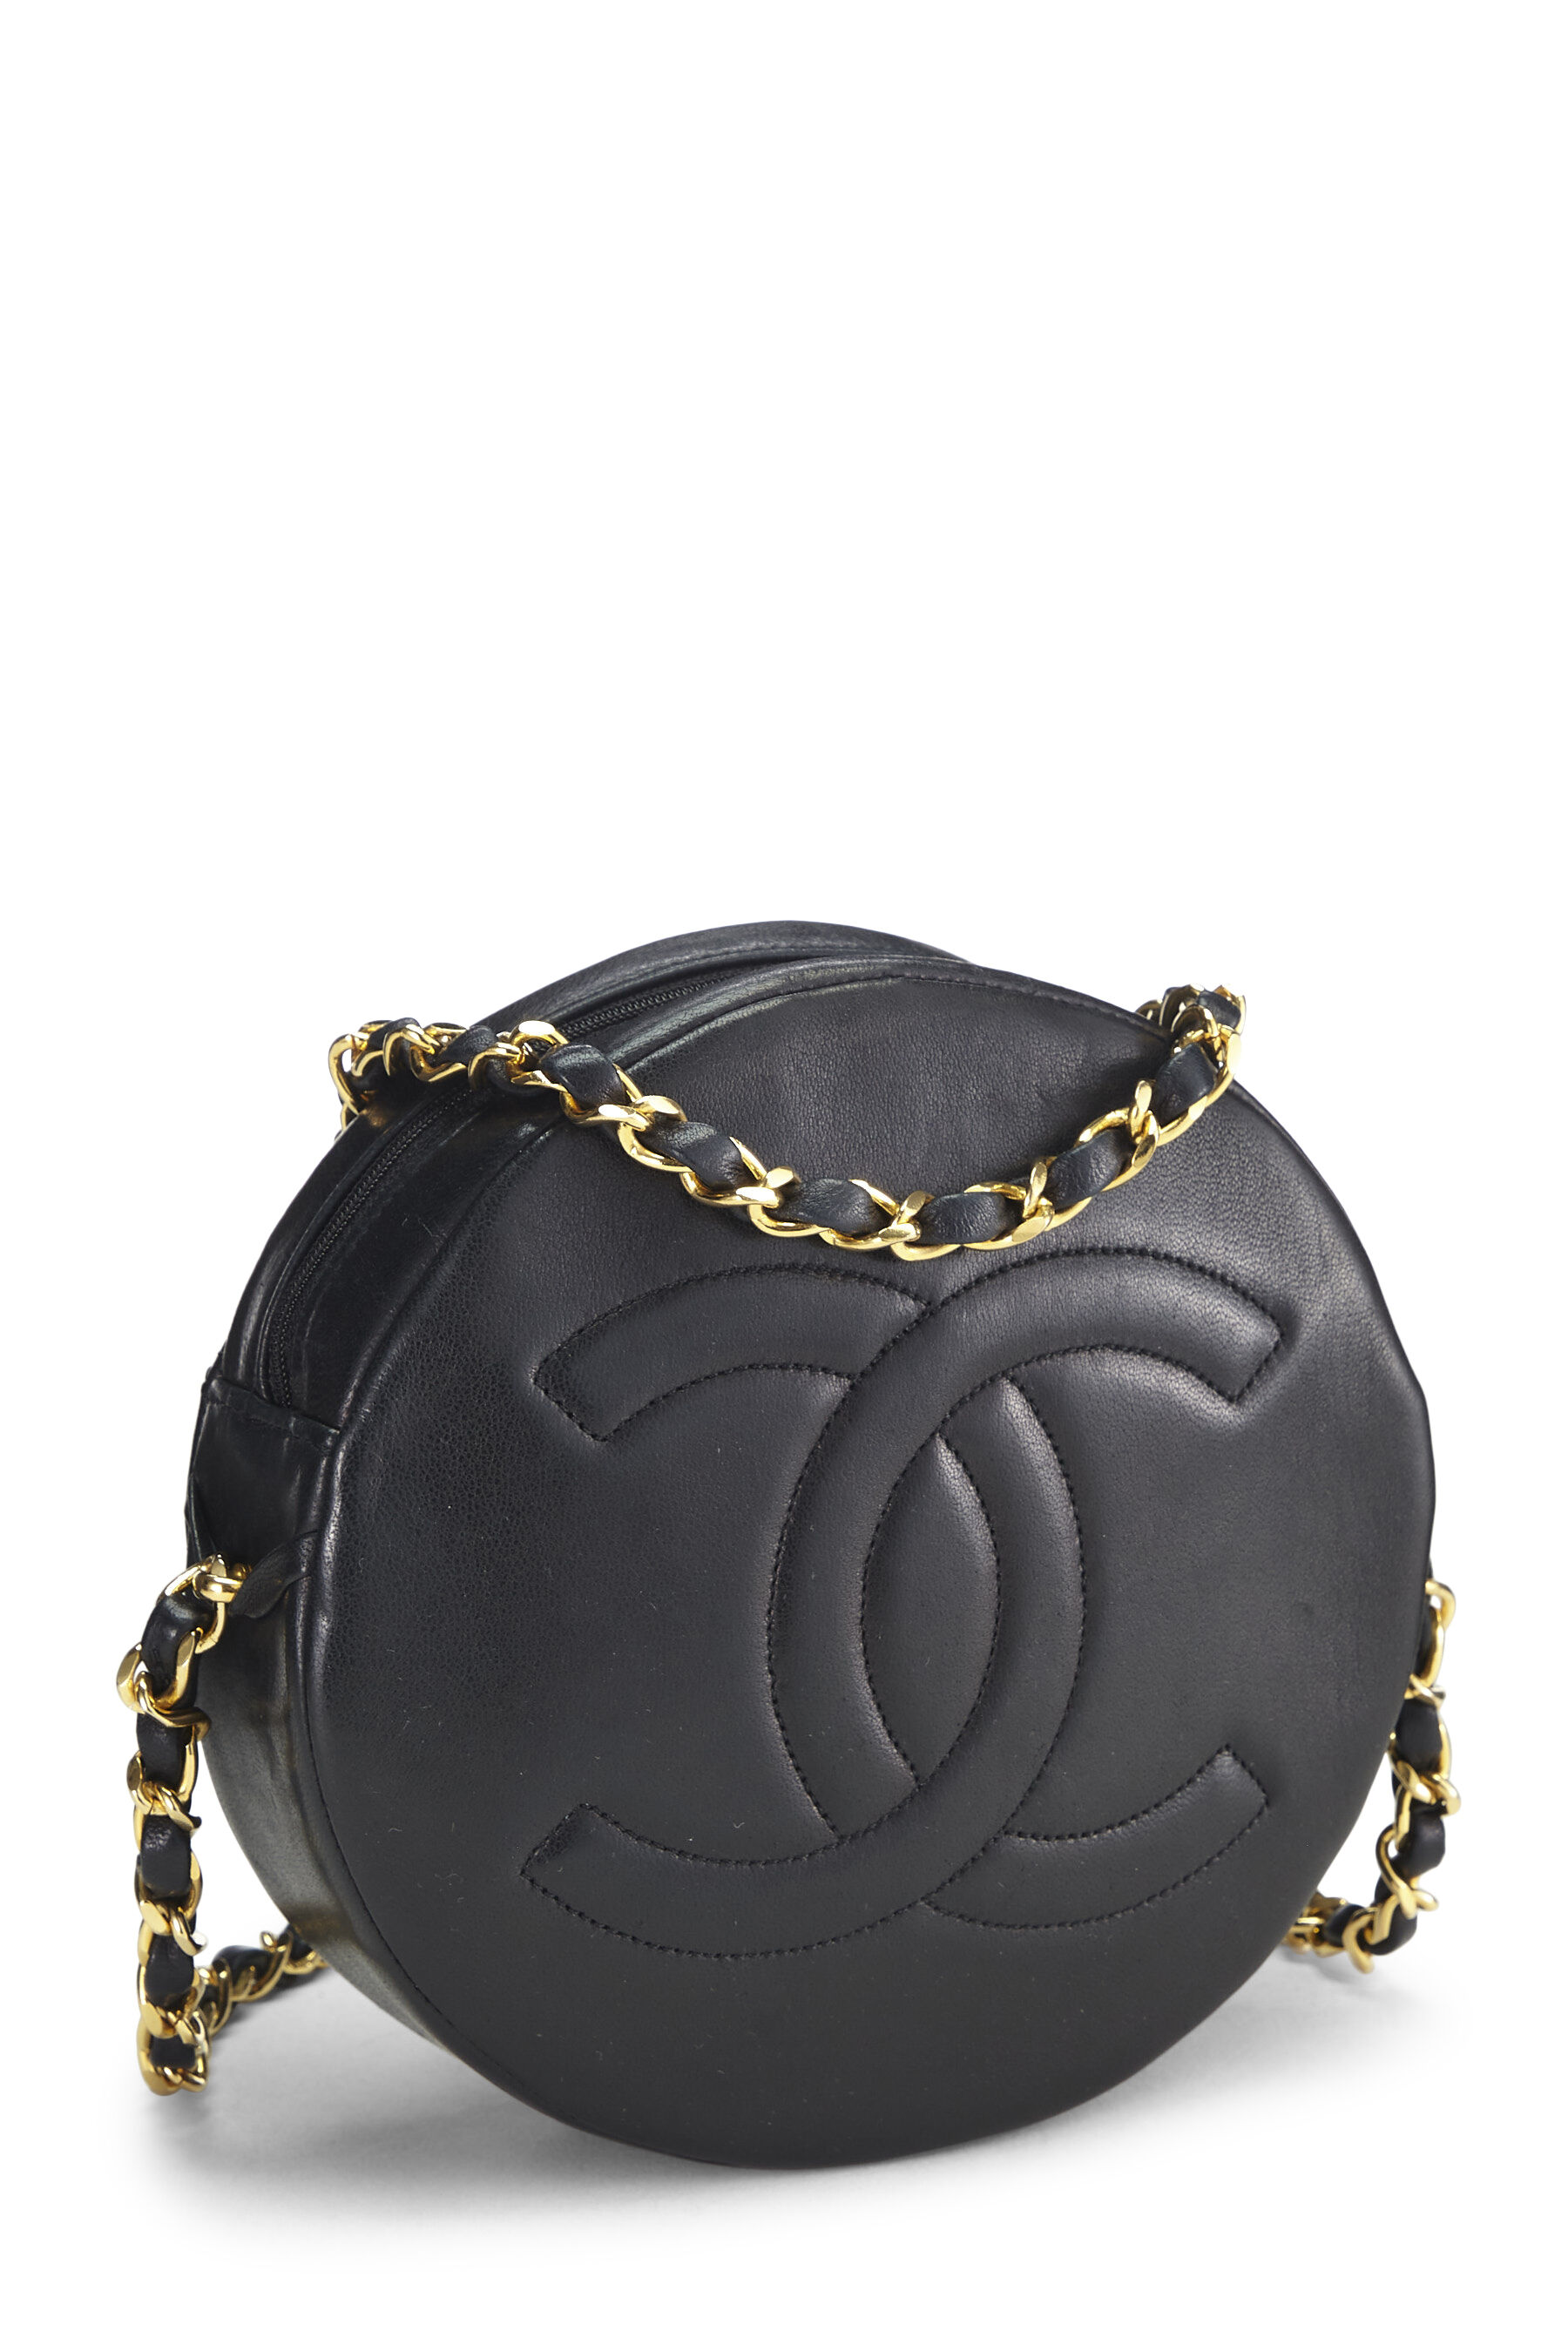 Chanel Round Lambskin Shoulder Bag